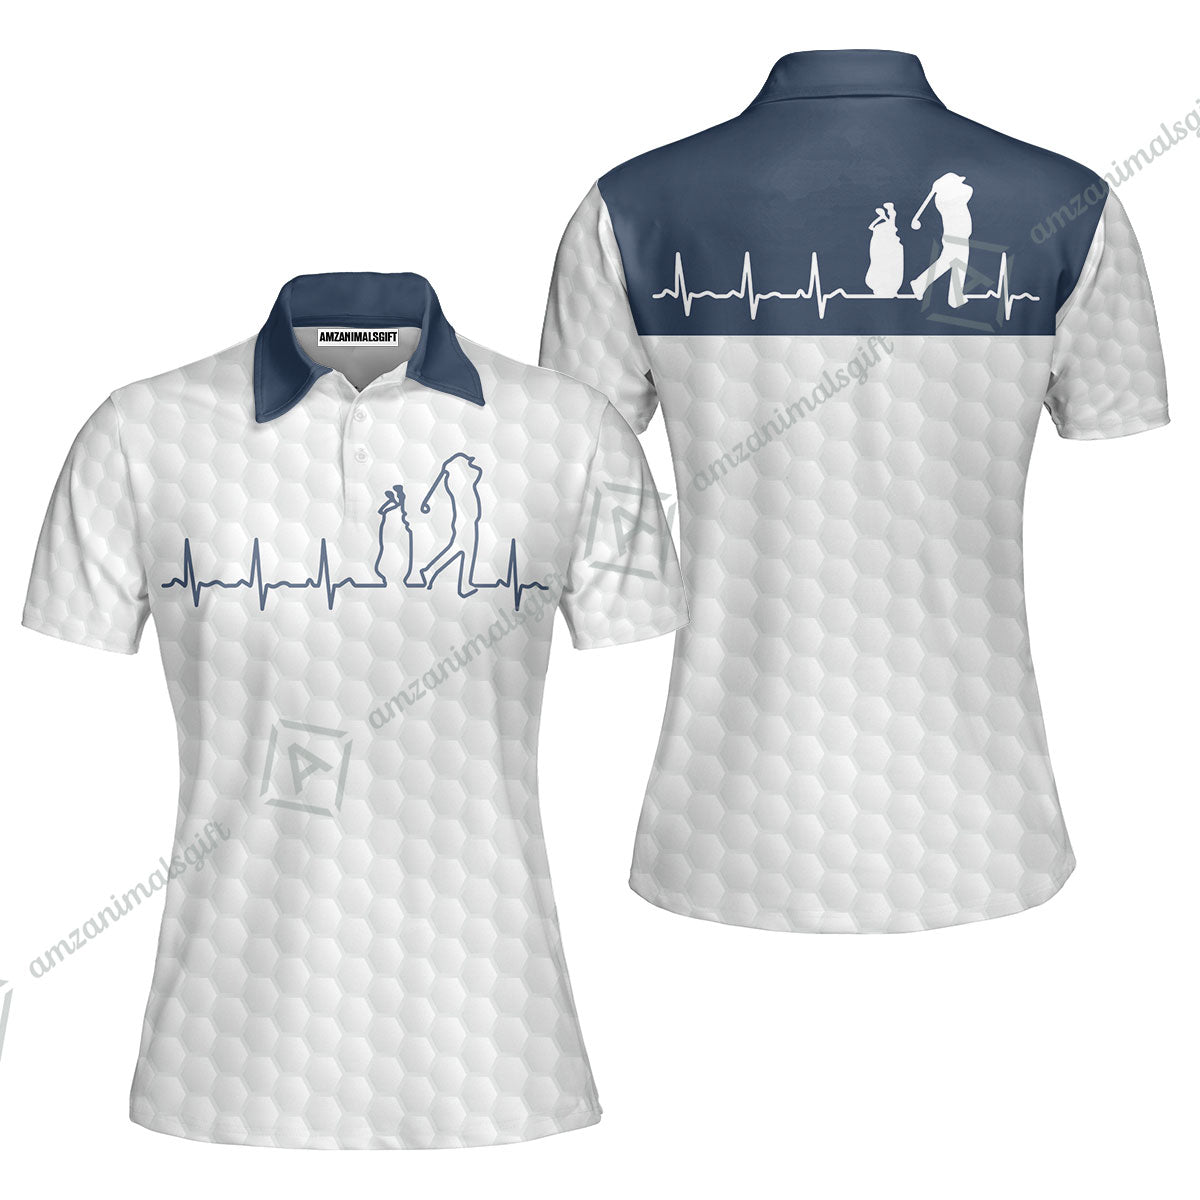 Golf Women Polo Shirt - Heartbeat Golfer White And Navy Golf Women Polo Shirt, White Golf Ball Pattern Women Polo Shirt - Best Gift For Golfers